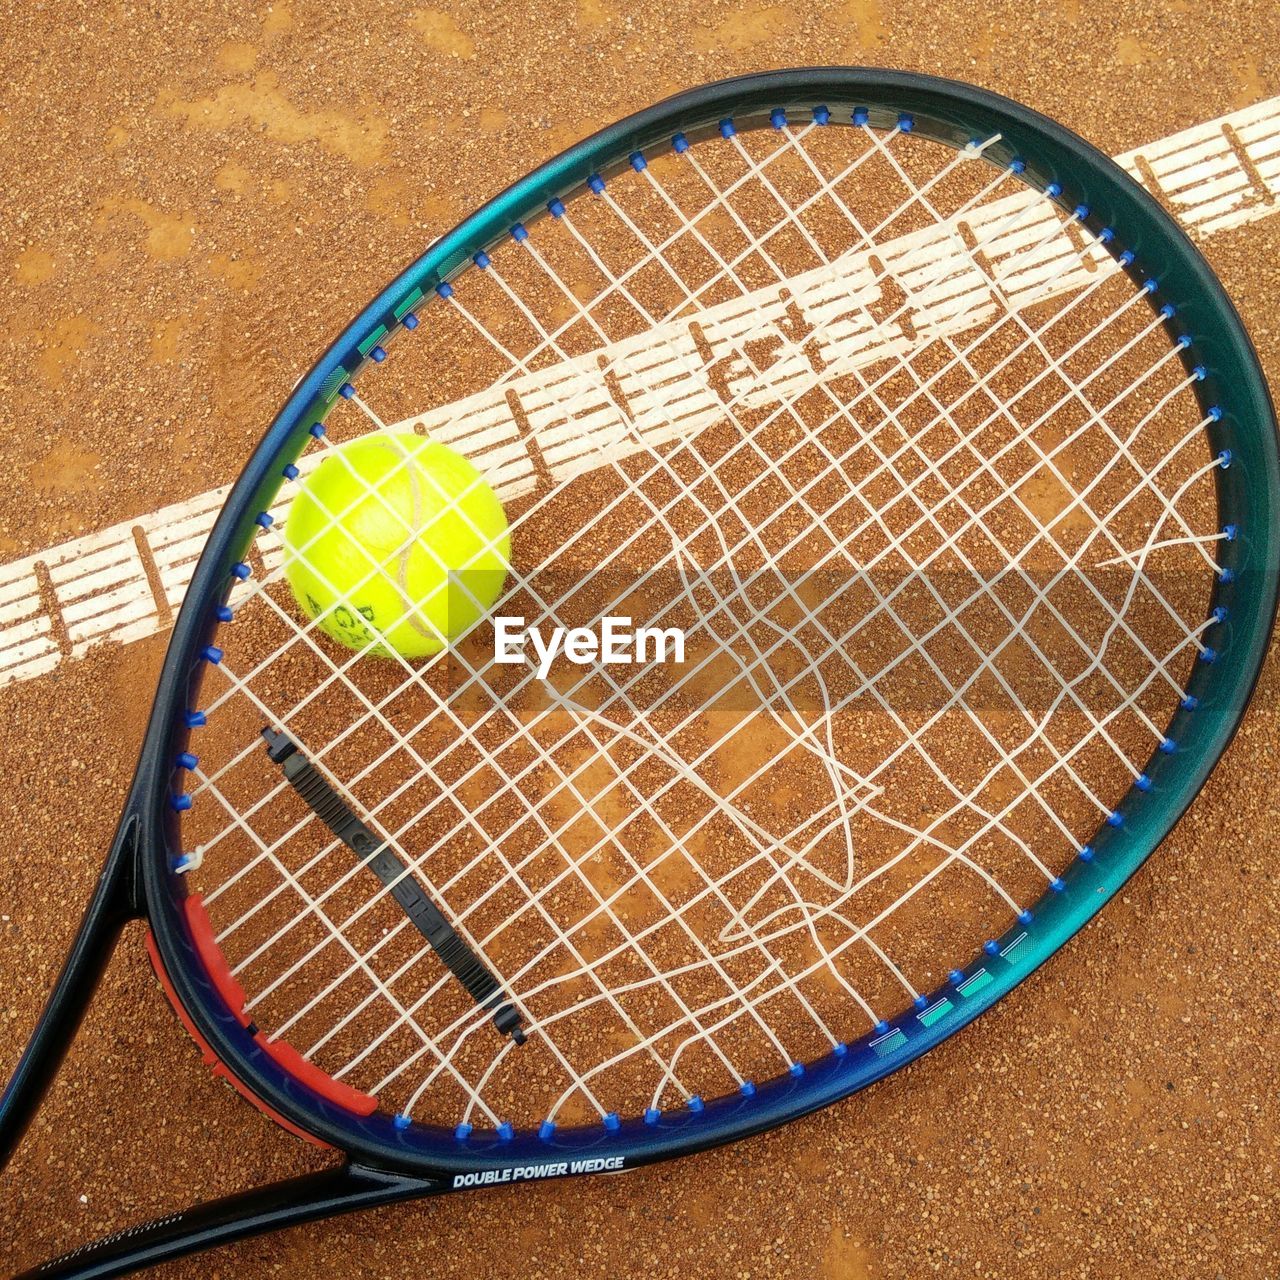 Broken tennis racket with ball